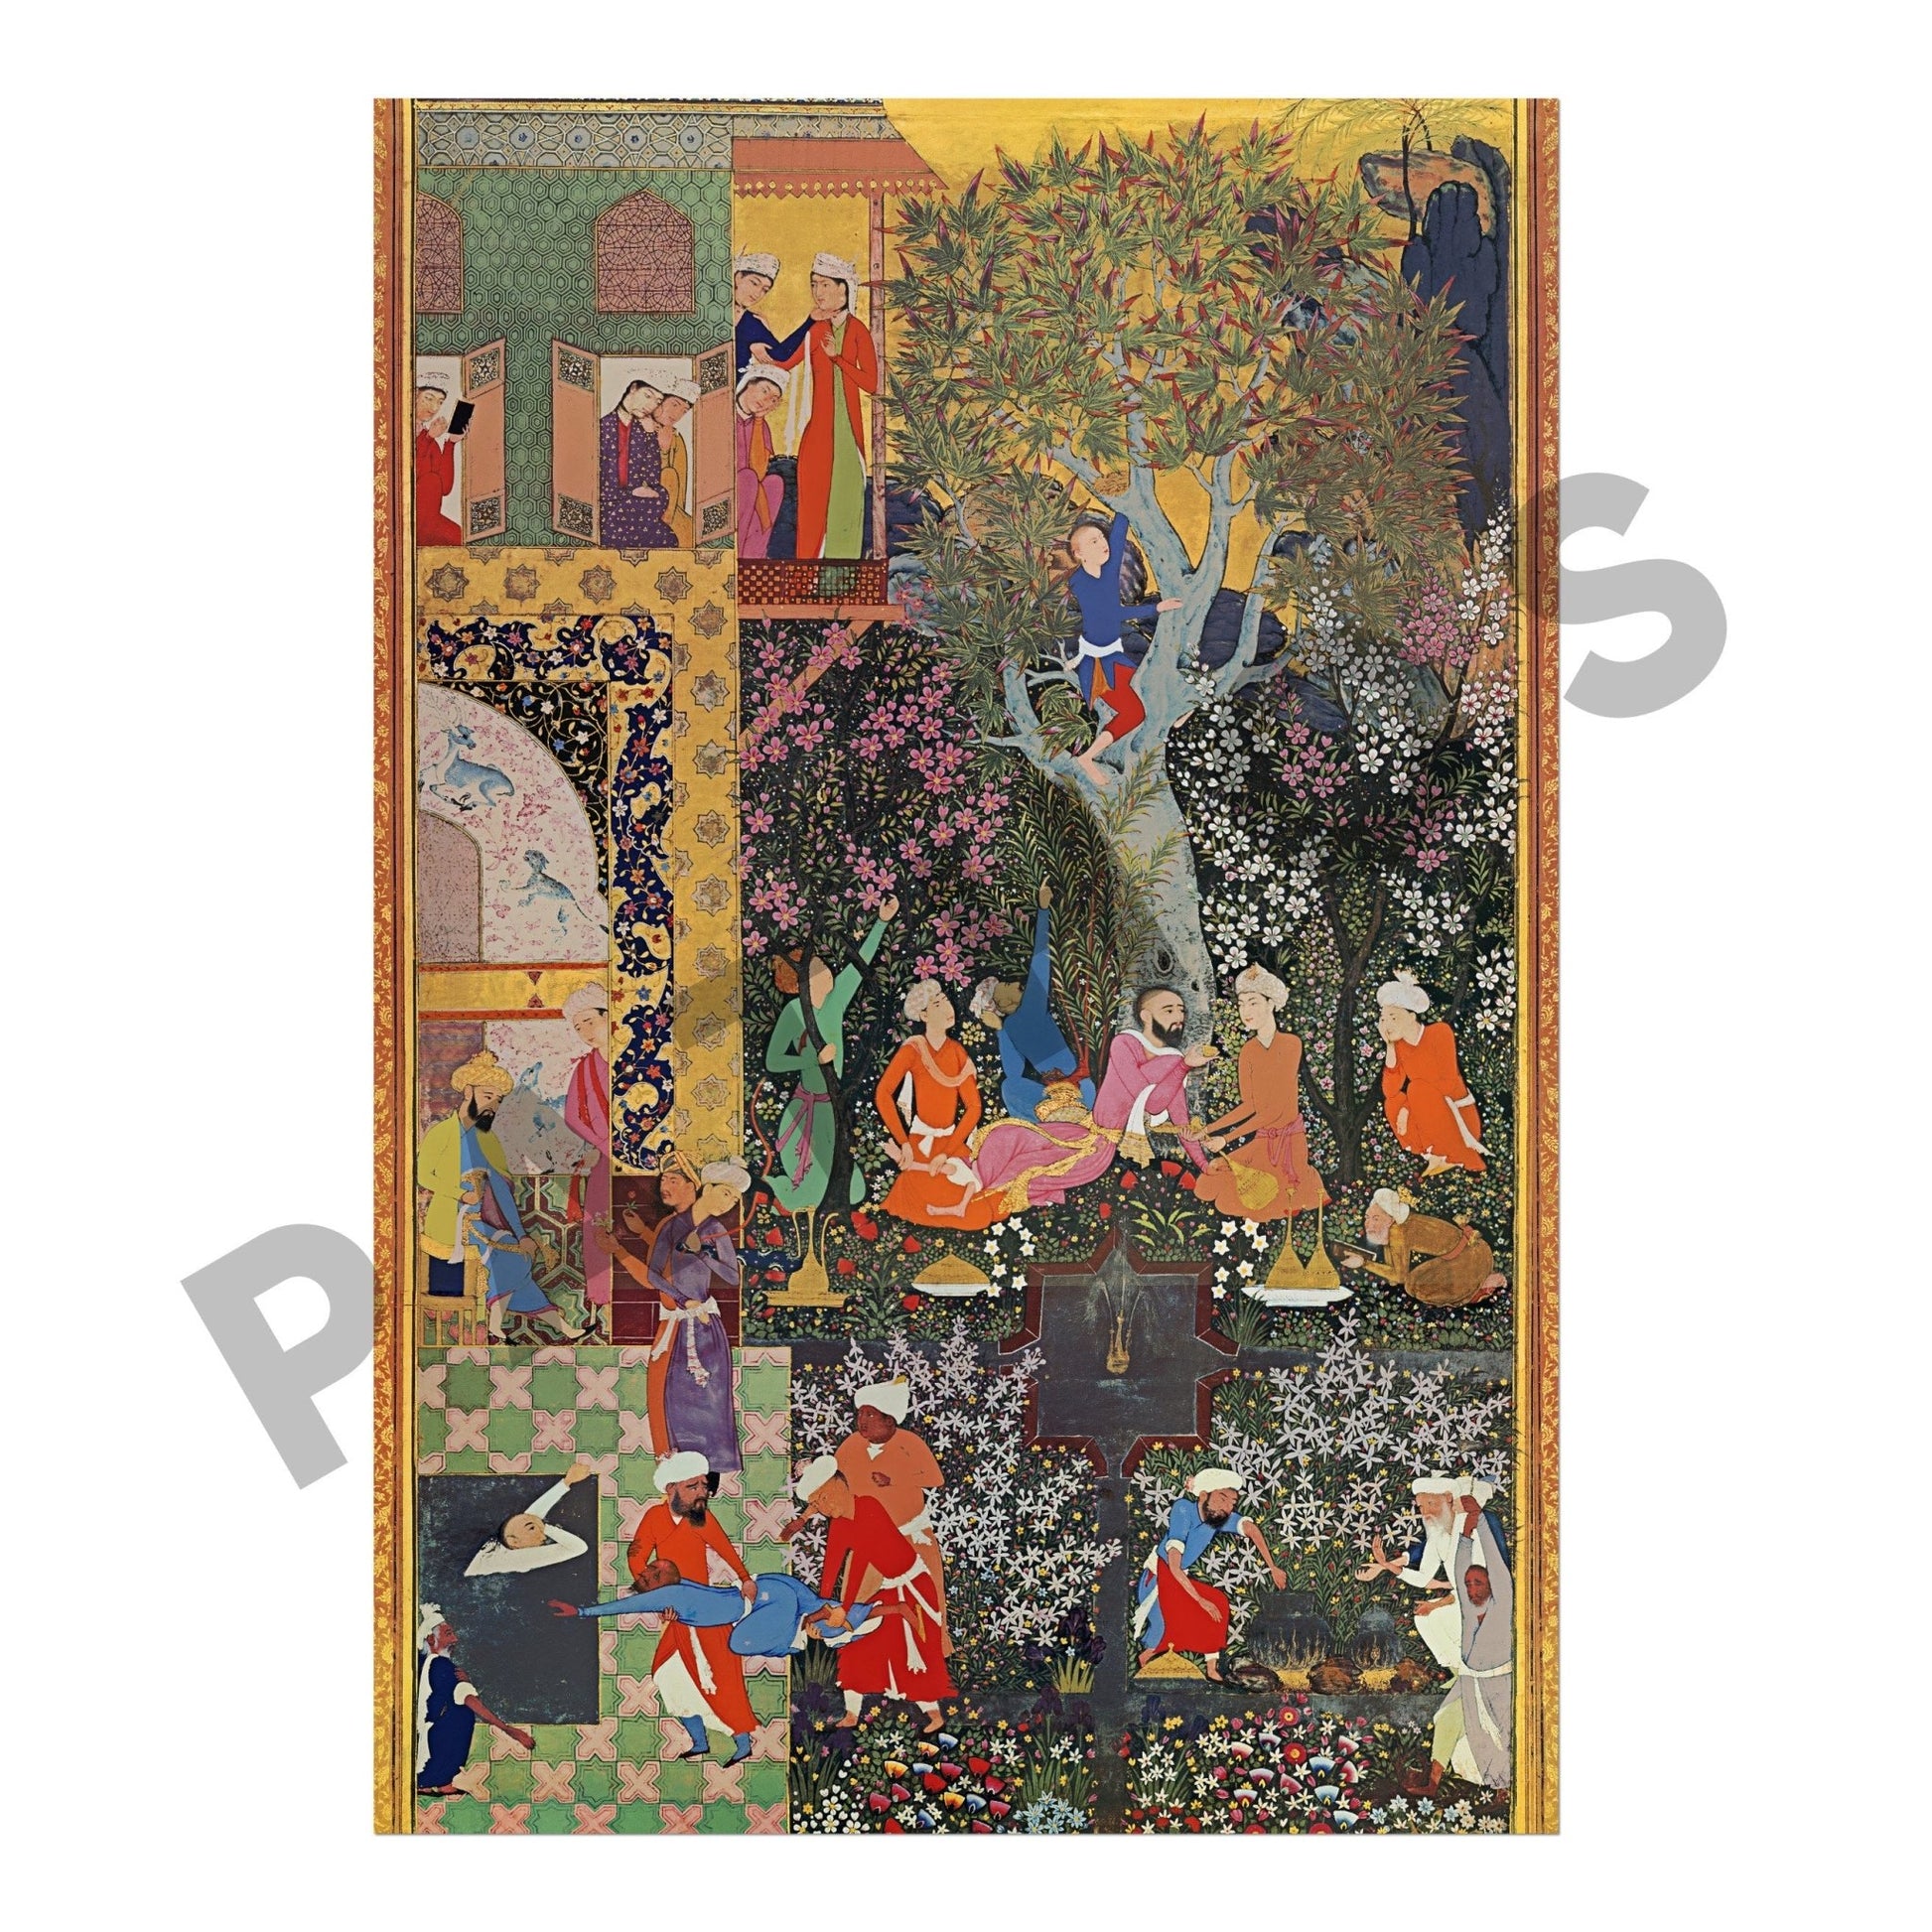 Set of 3 - Traditional Persian Miniature Art Featuring People - Pathos Studio - Posters, Prints, & Visual Artwork